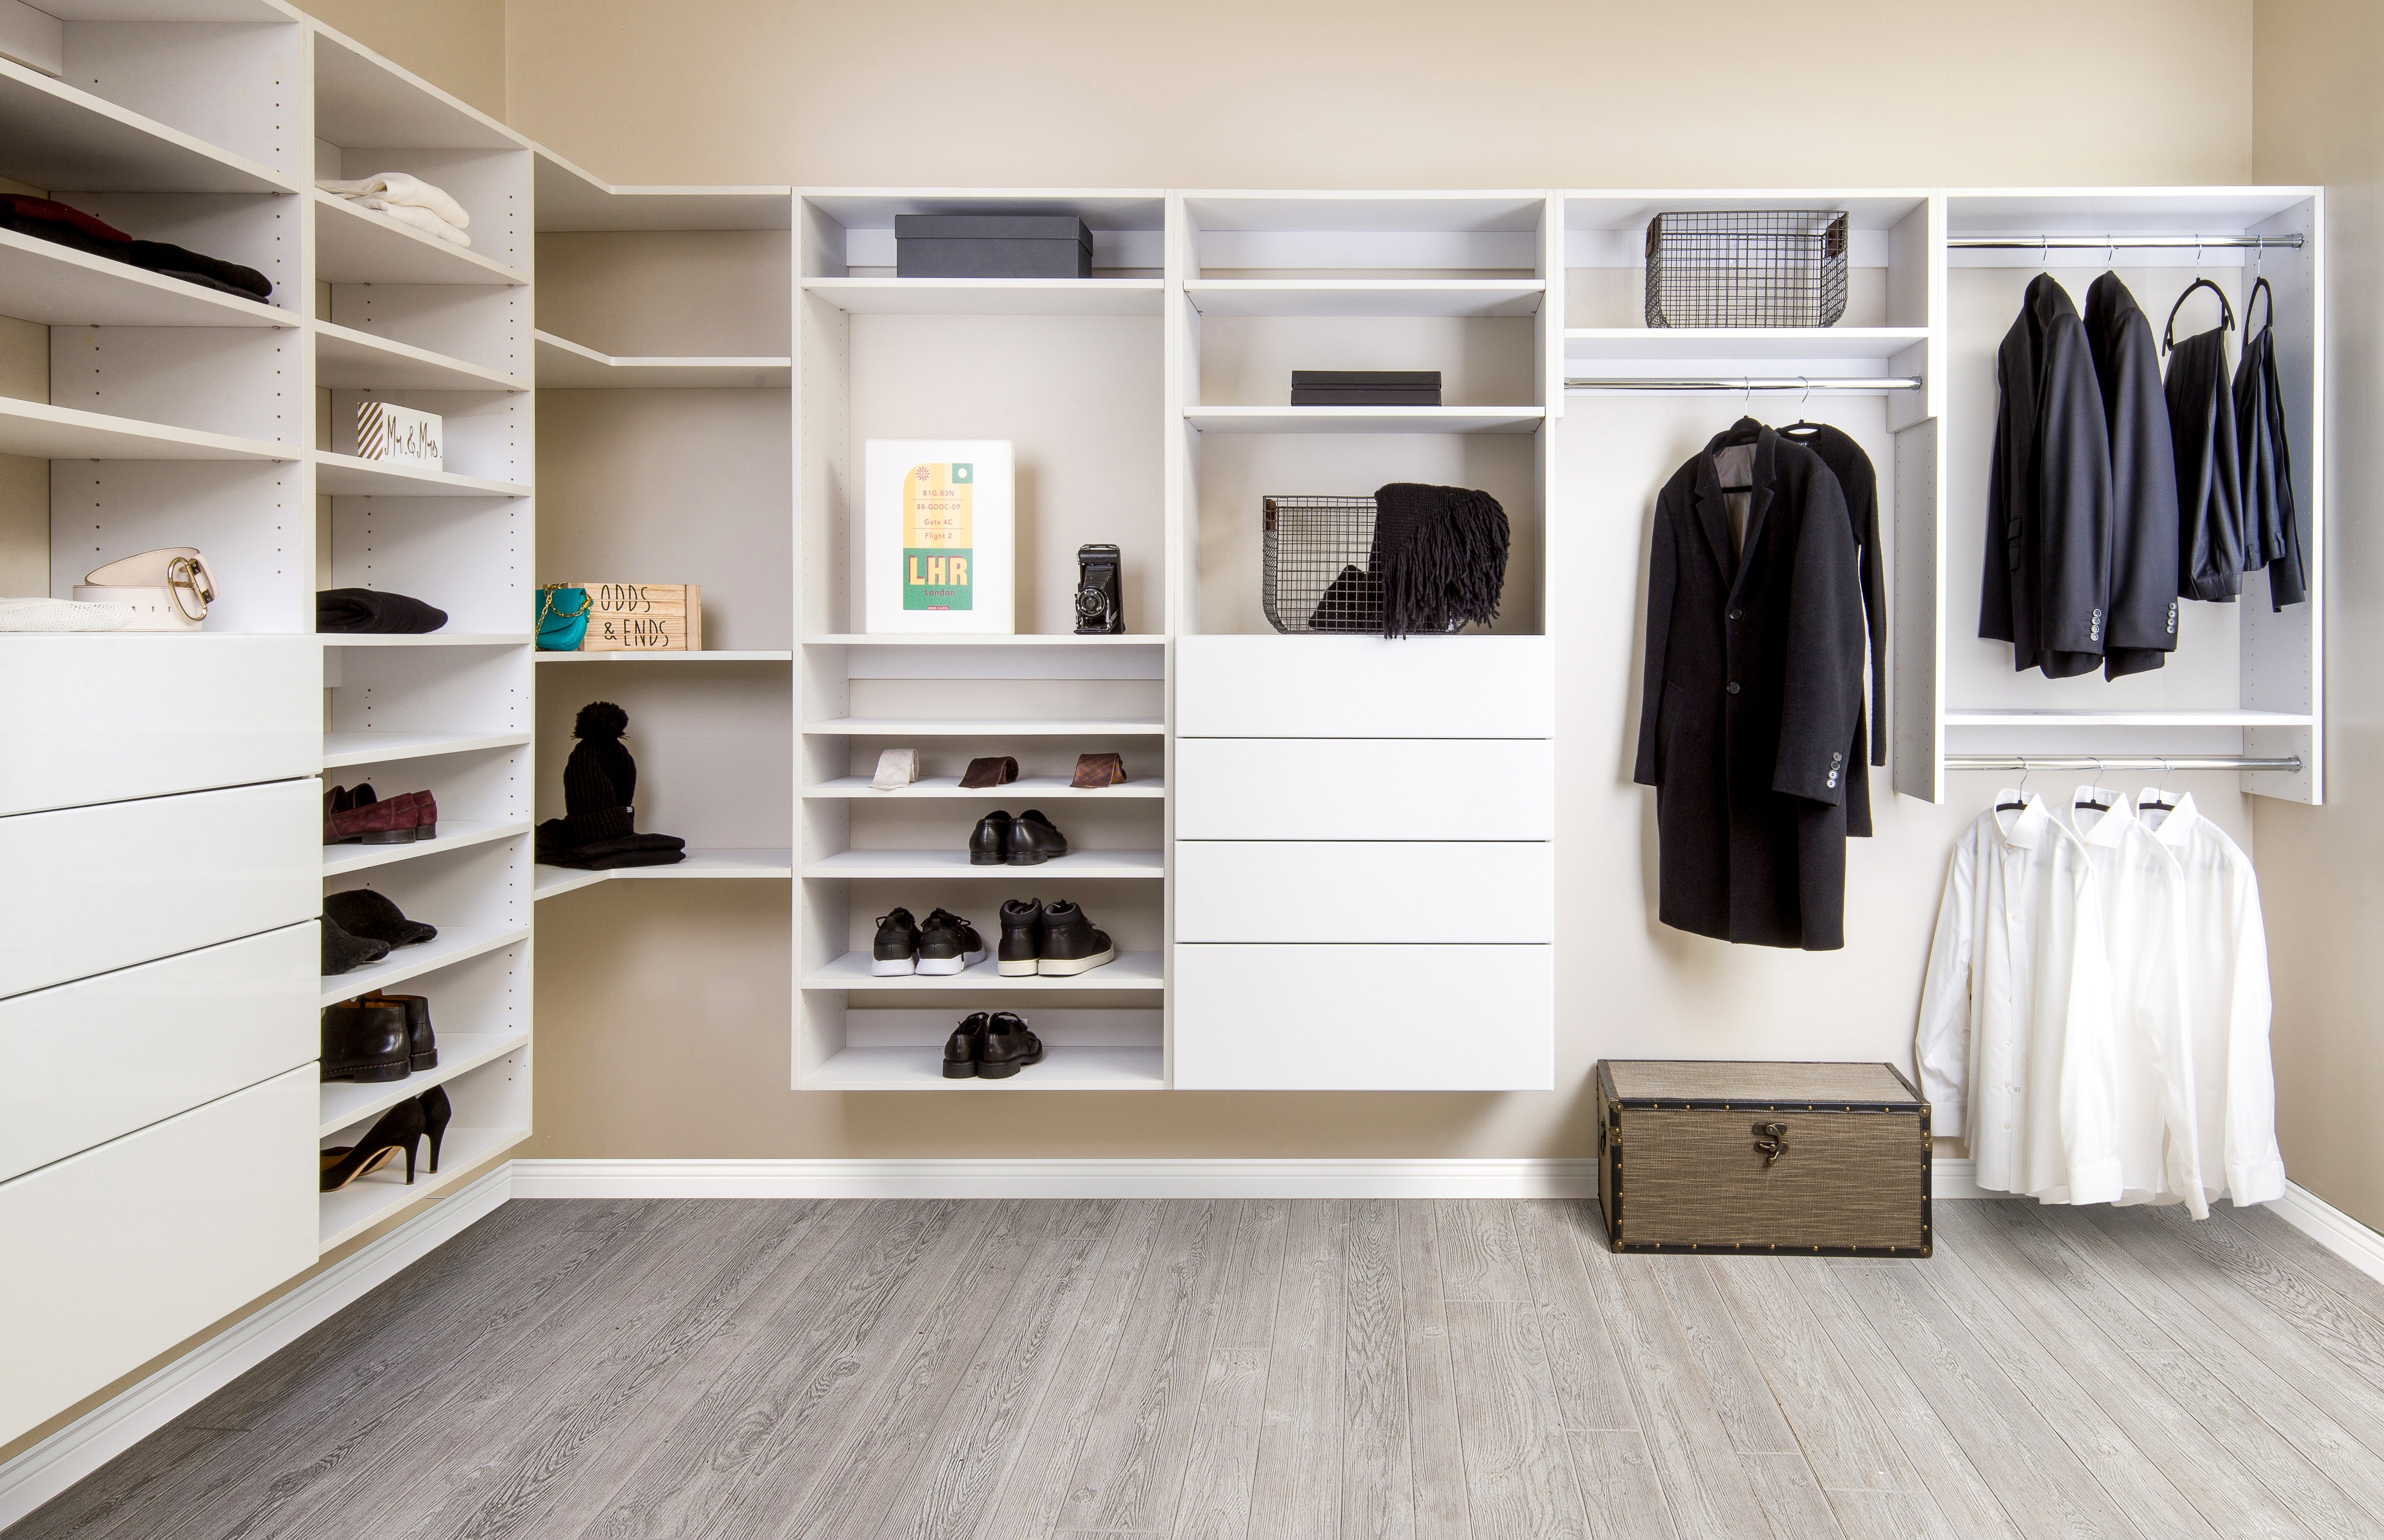 Master Bedroom Ideas With Walk In Closet - BEST HOME DESIGN IDEAS